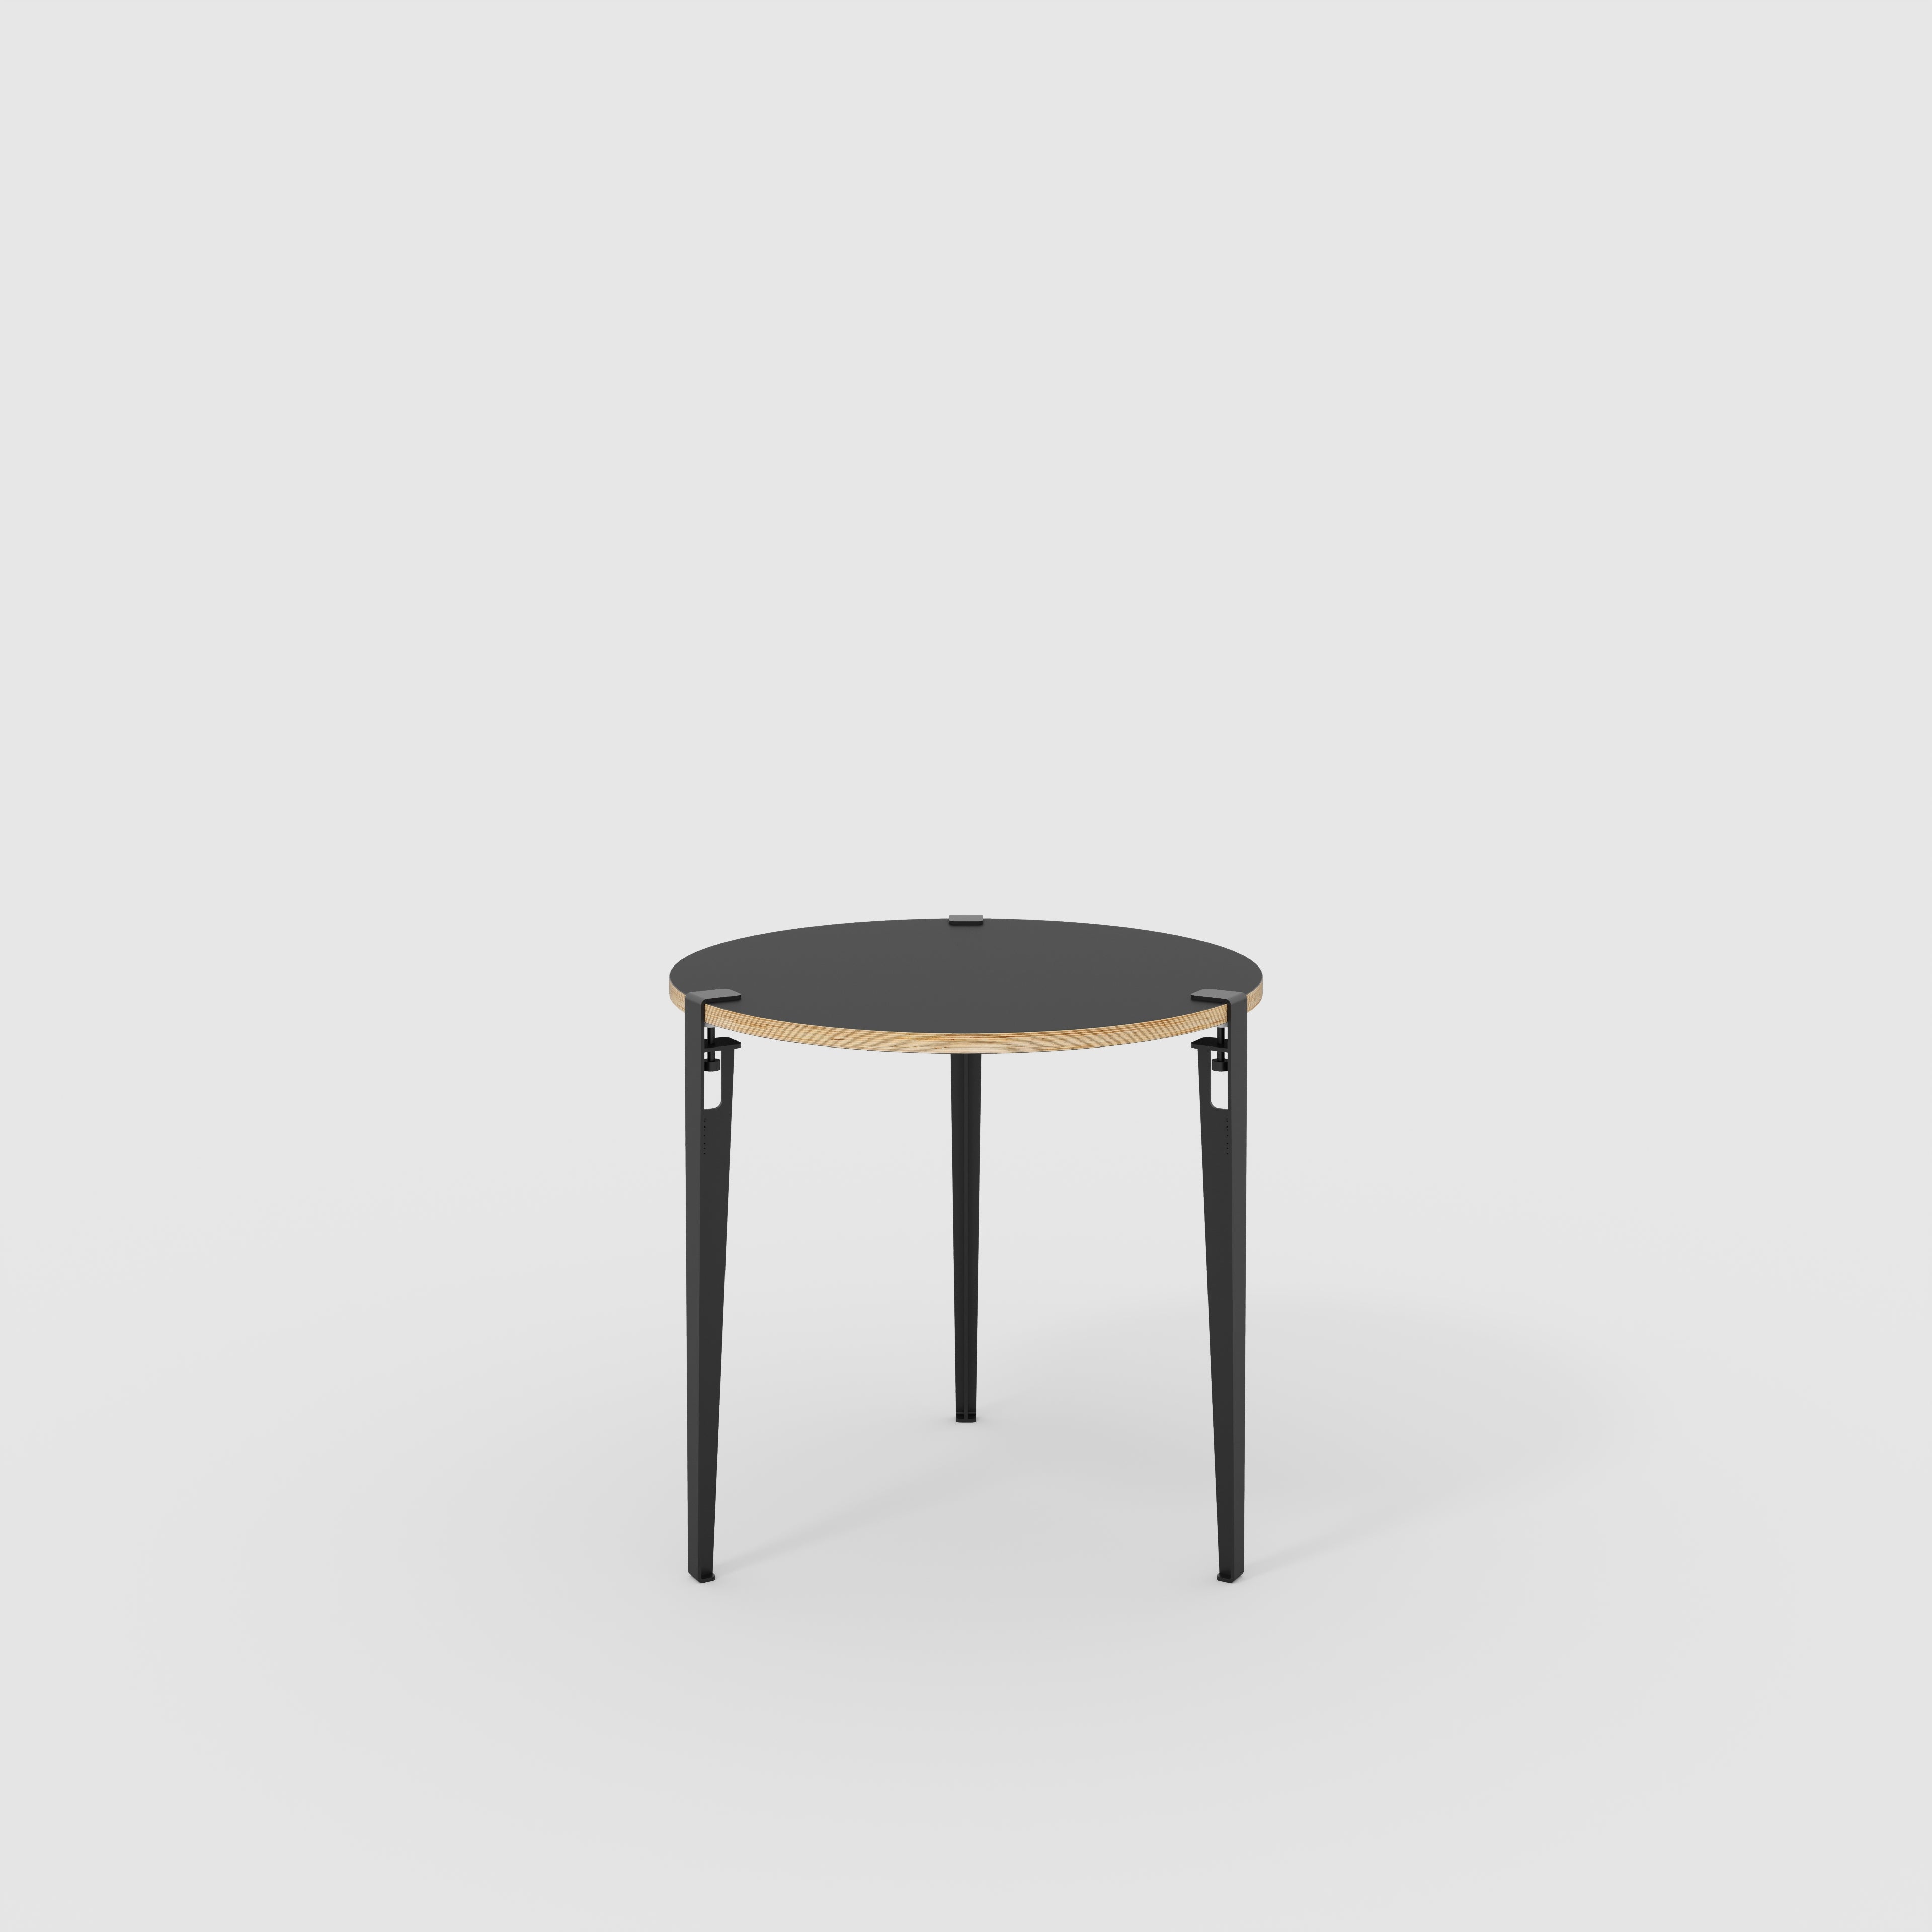 Round Table with Black Tiptoe Legs - Formica Diamond Black - 800(dia) x 750(h)